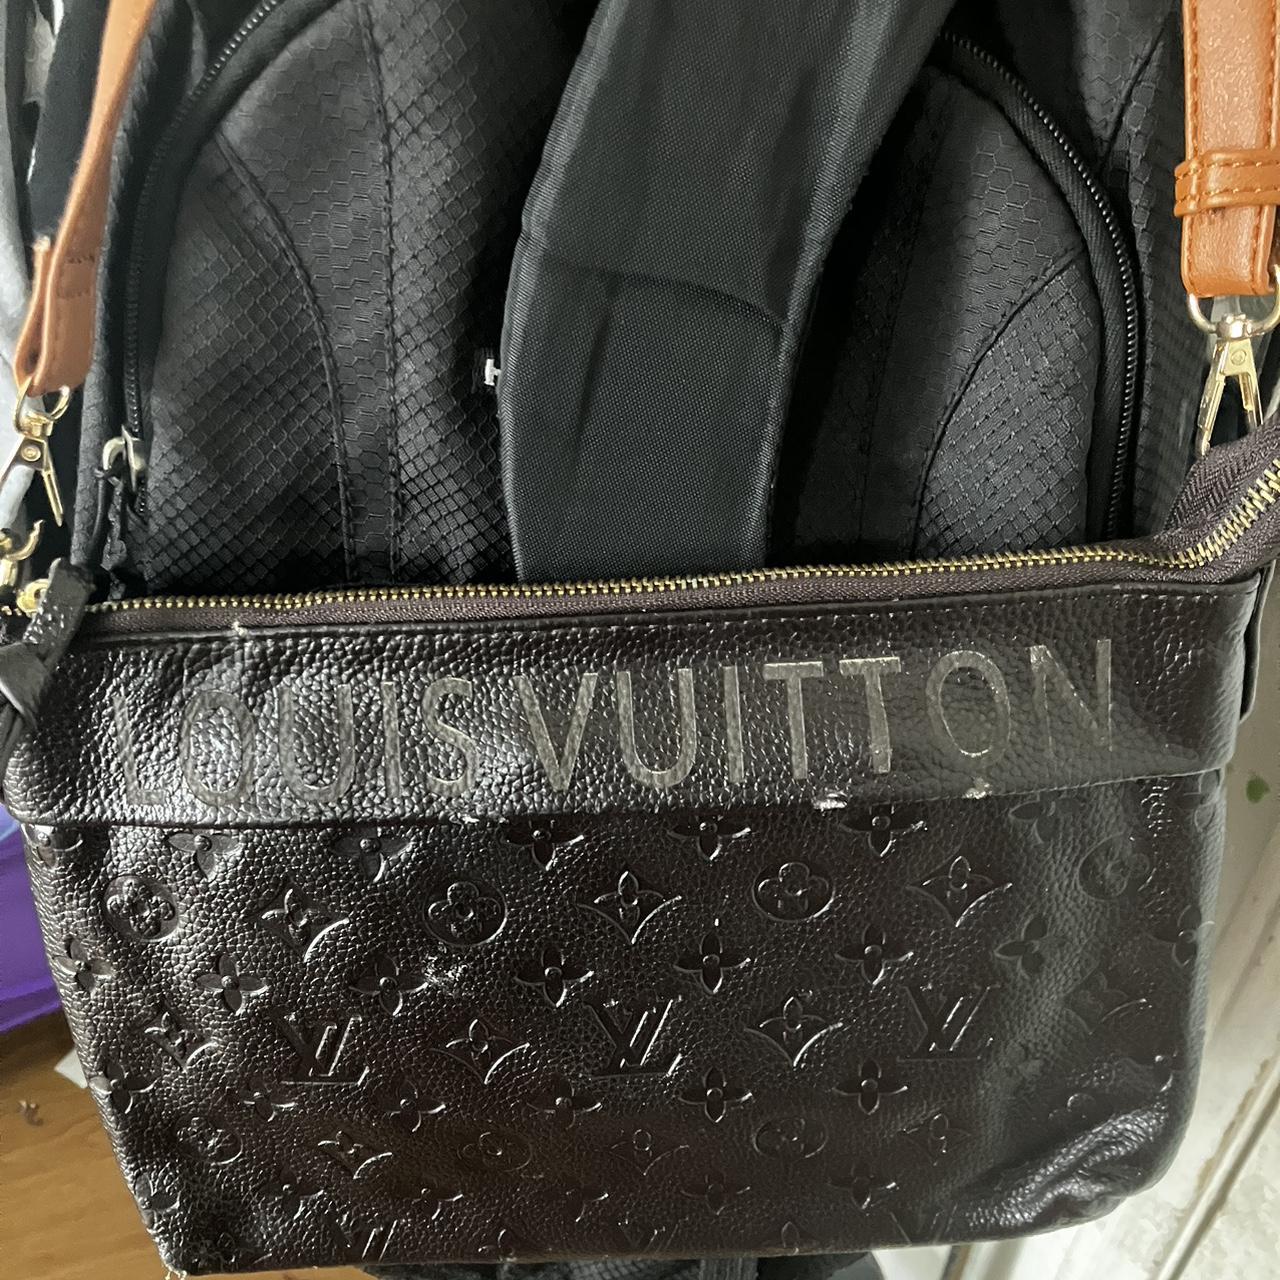 Rare Vintage Louis V purse One zipper is kinda - Depop